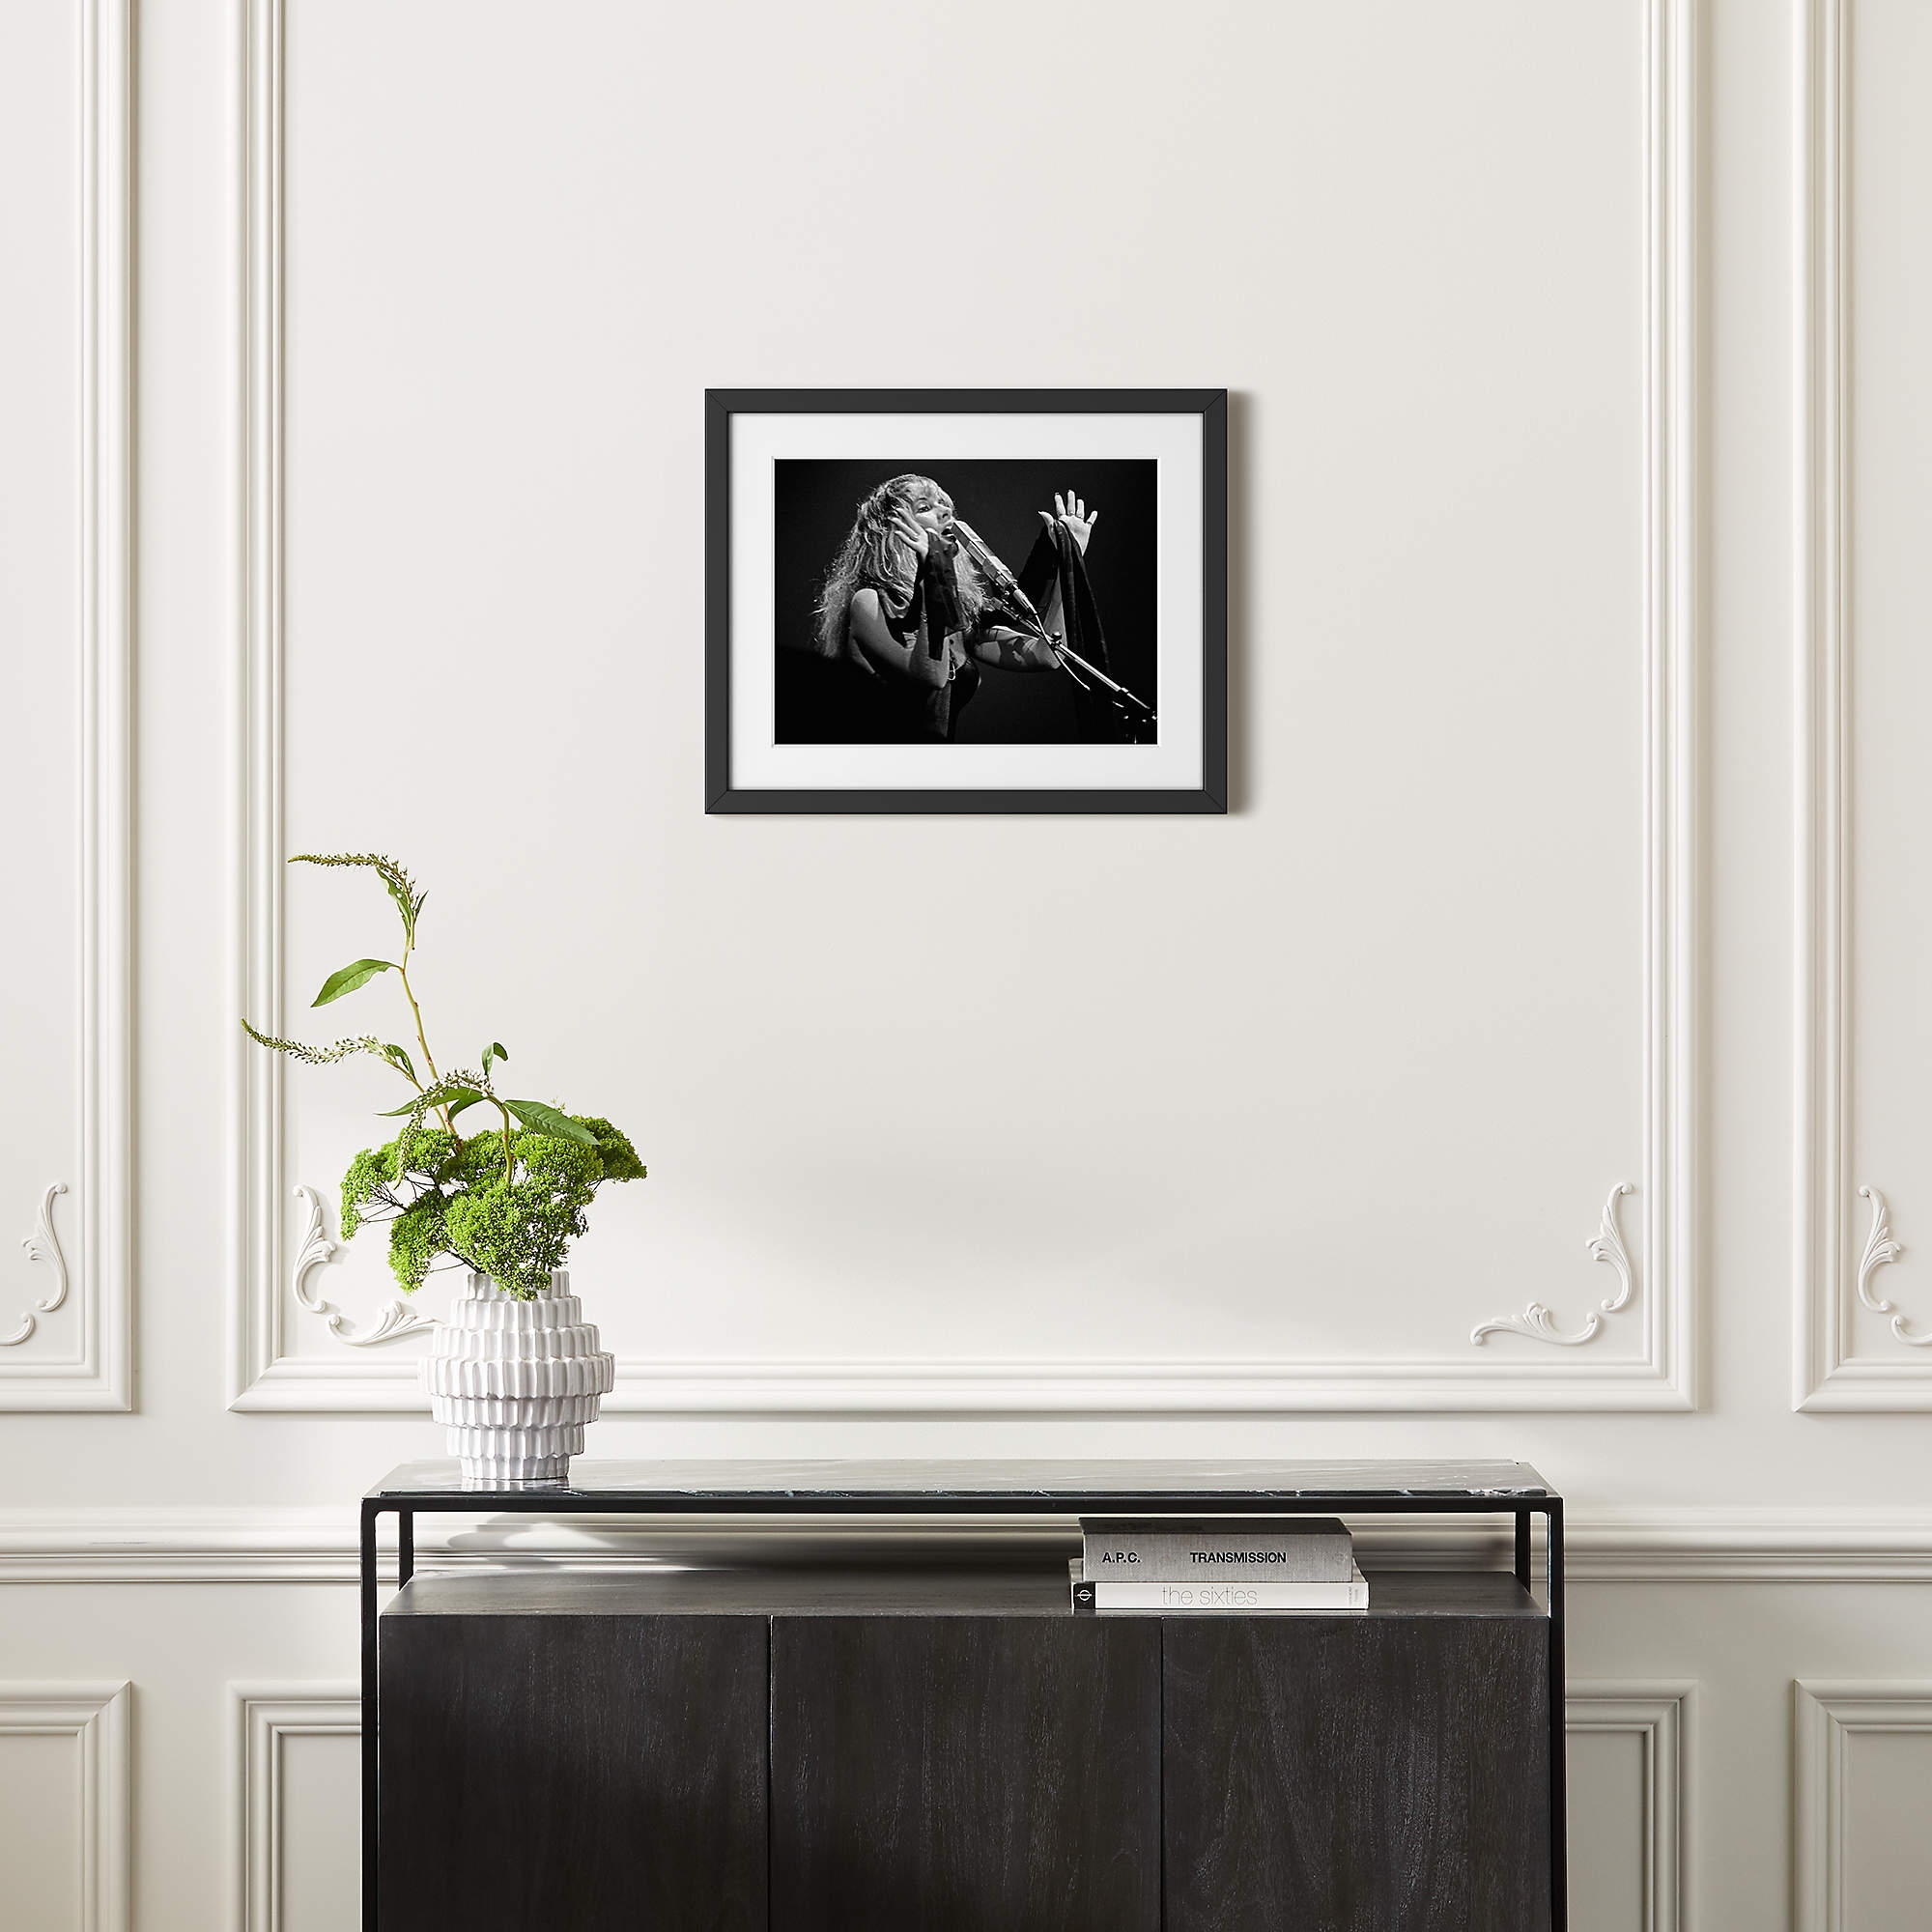 'Stevie Nicks, 1977' Photographic Print in Black Frame 21.5"x17.5" - Image 1